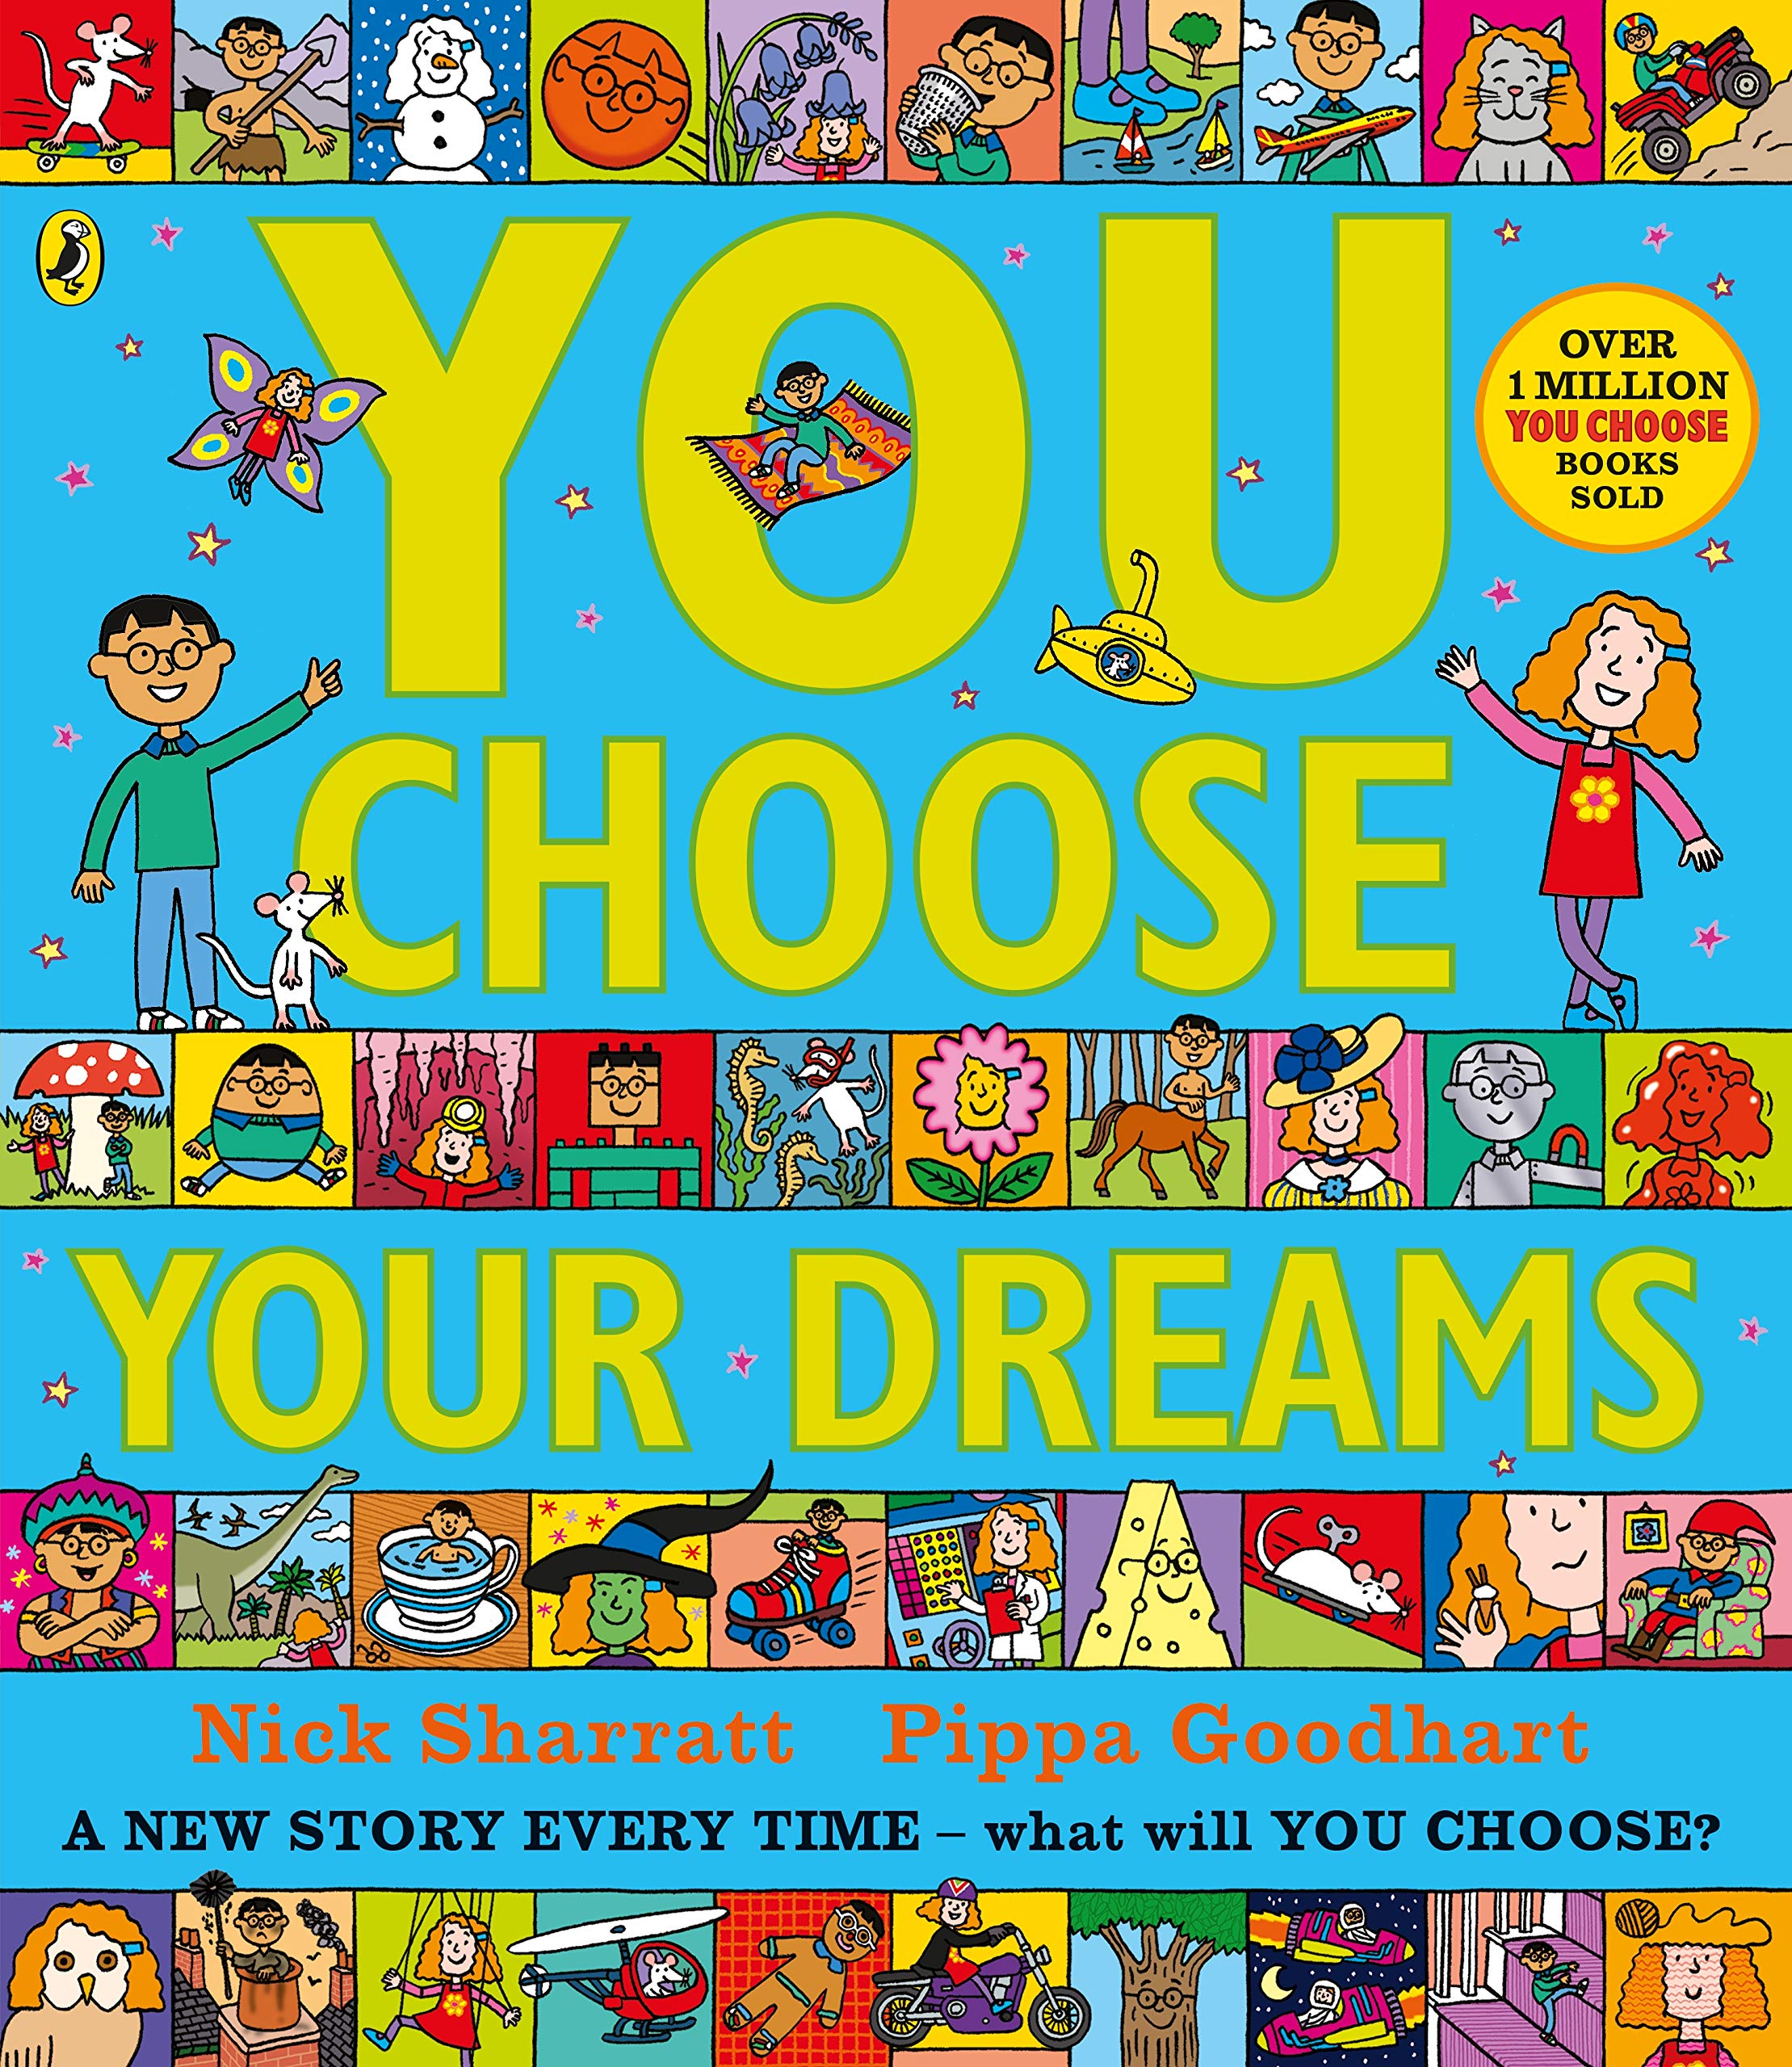 You Choose Your Dreams | Pippa Goodhart